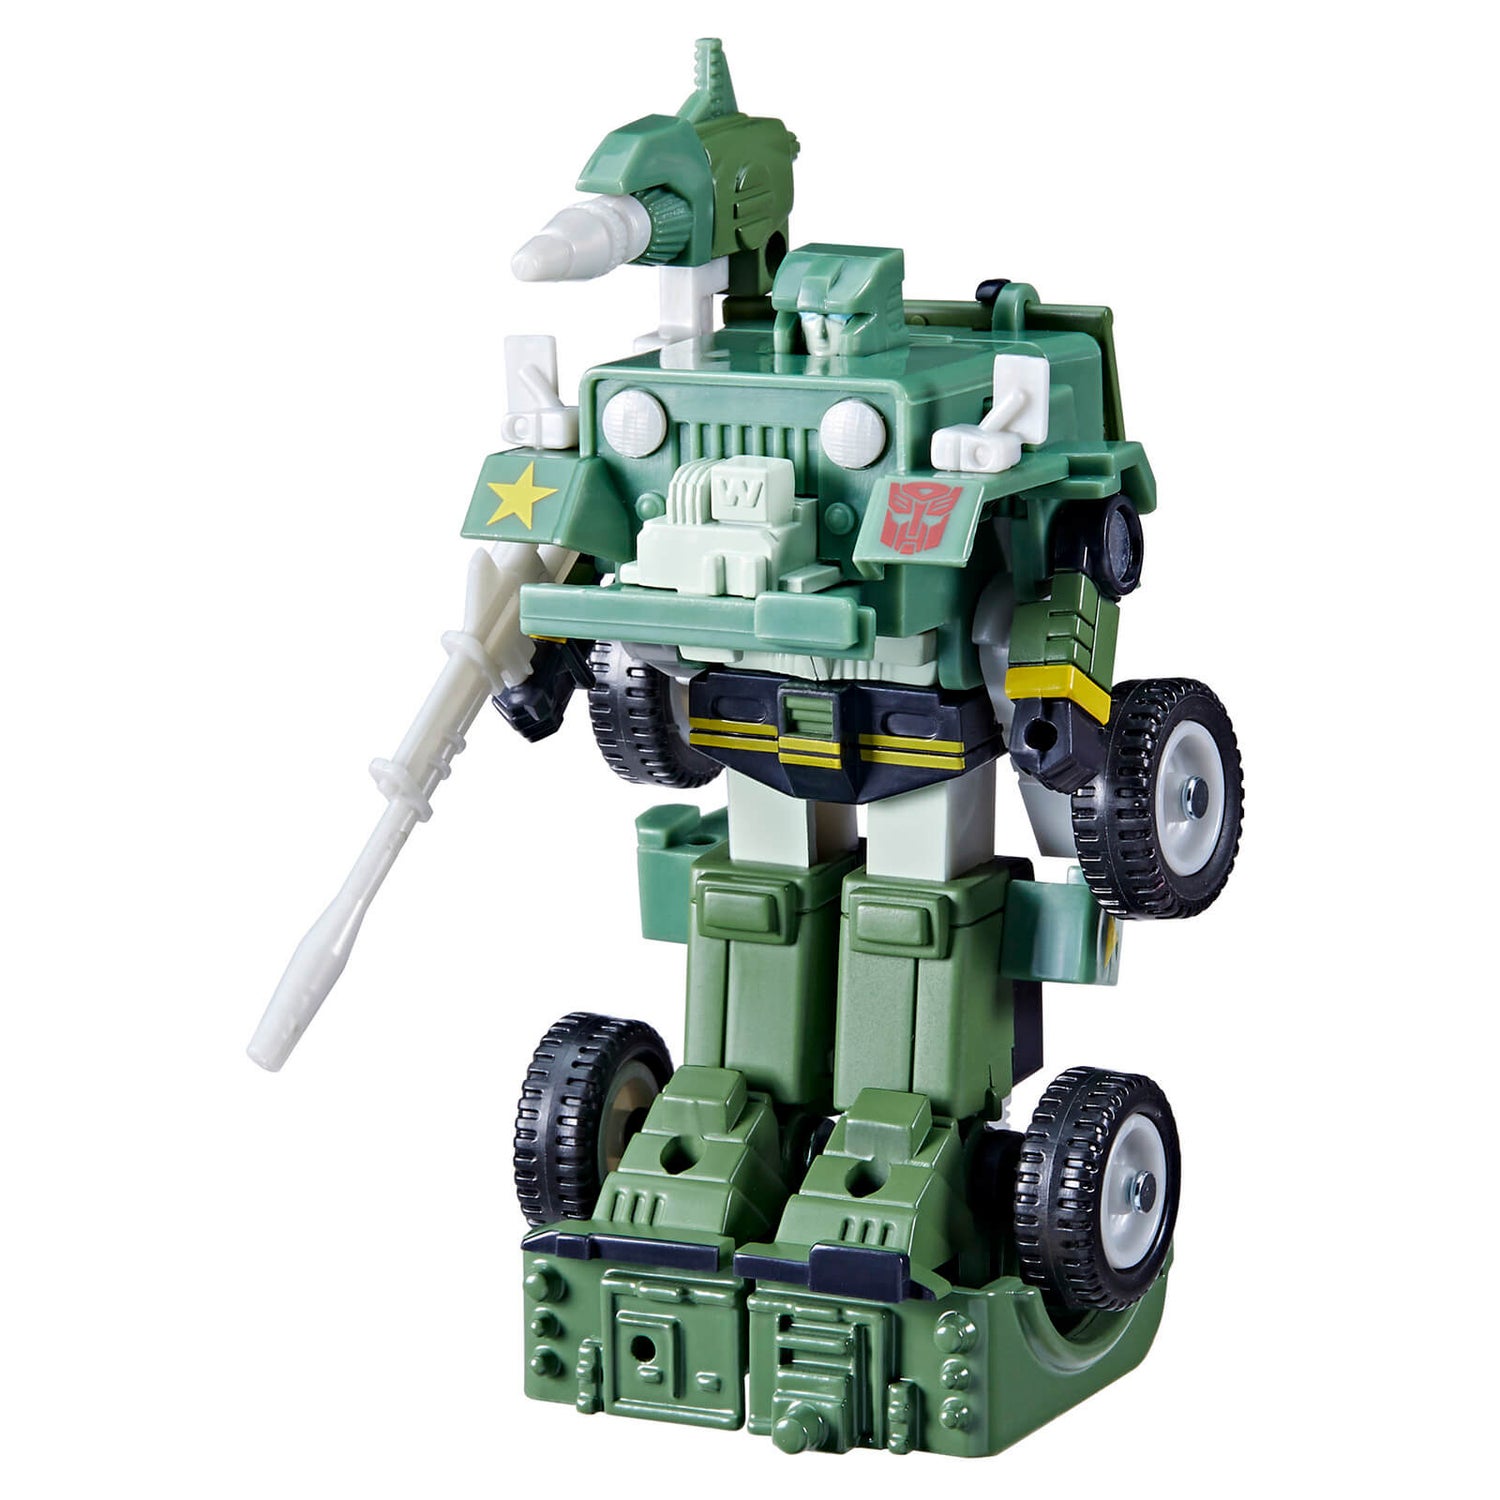 Hasbro Transformers Toys Retro G1 Autobot Hound Converting Action Figure